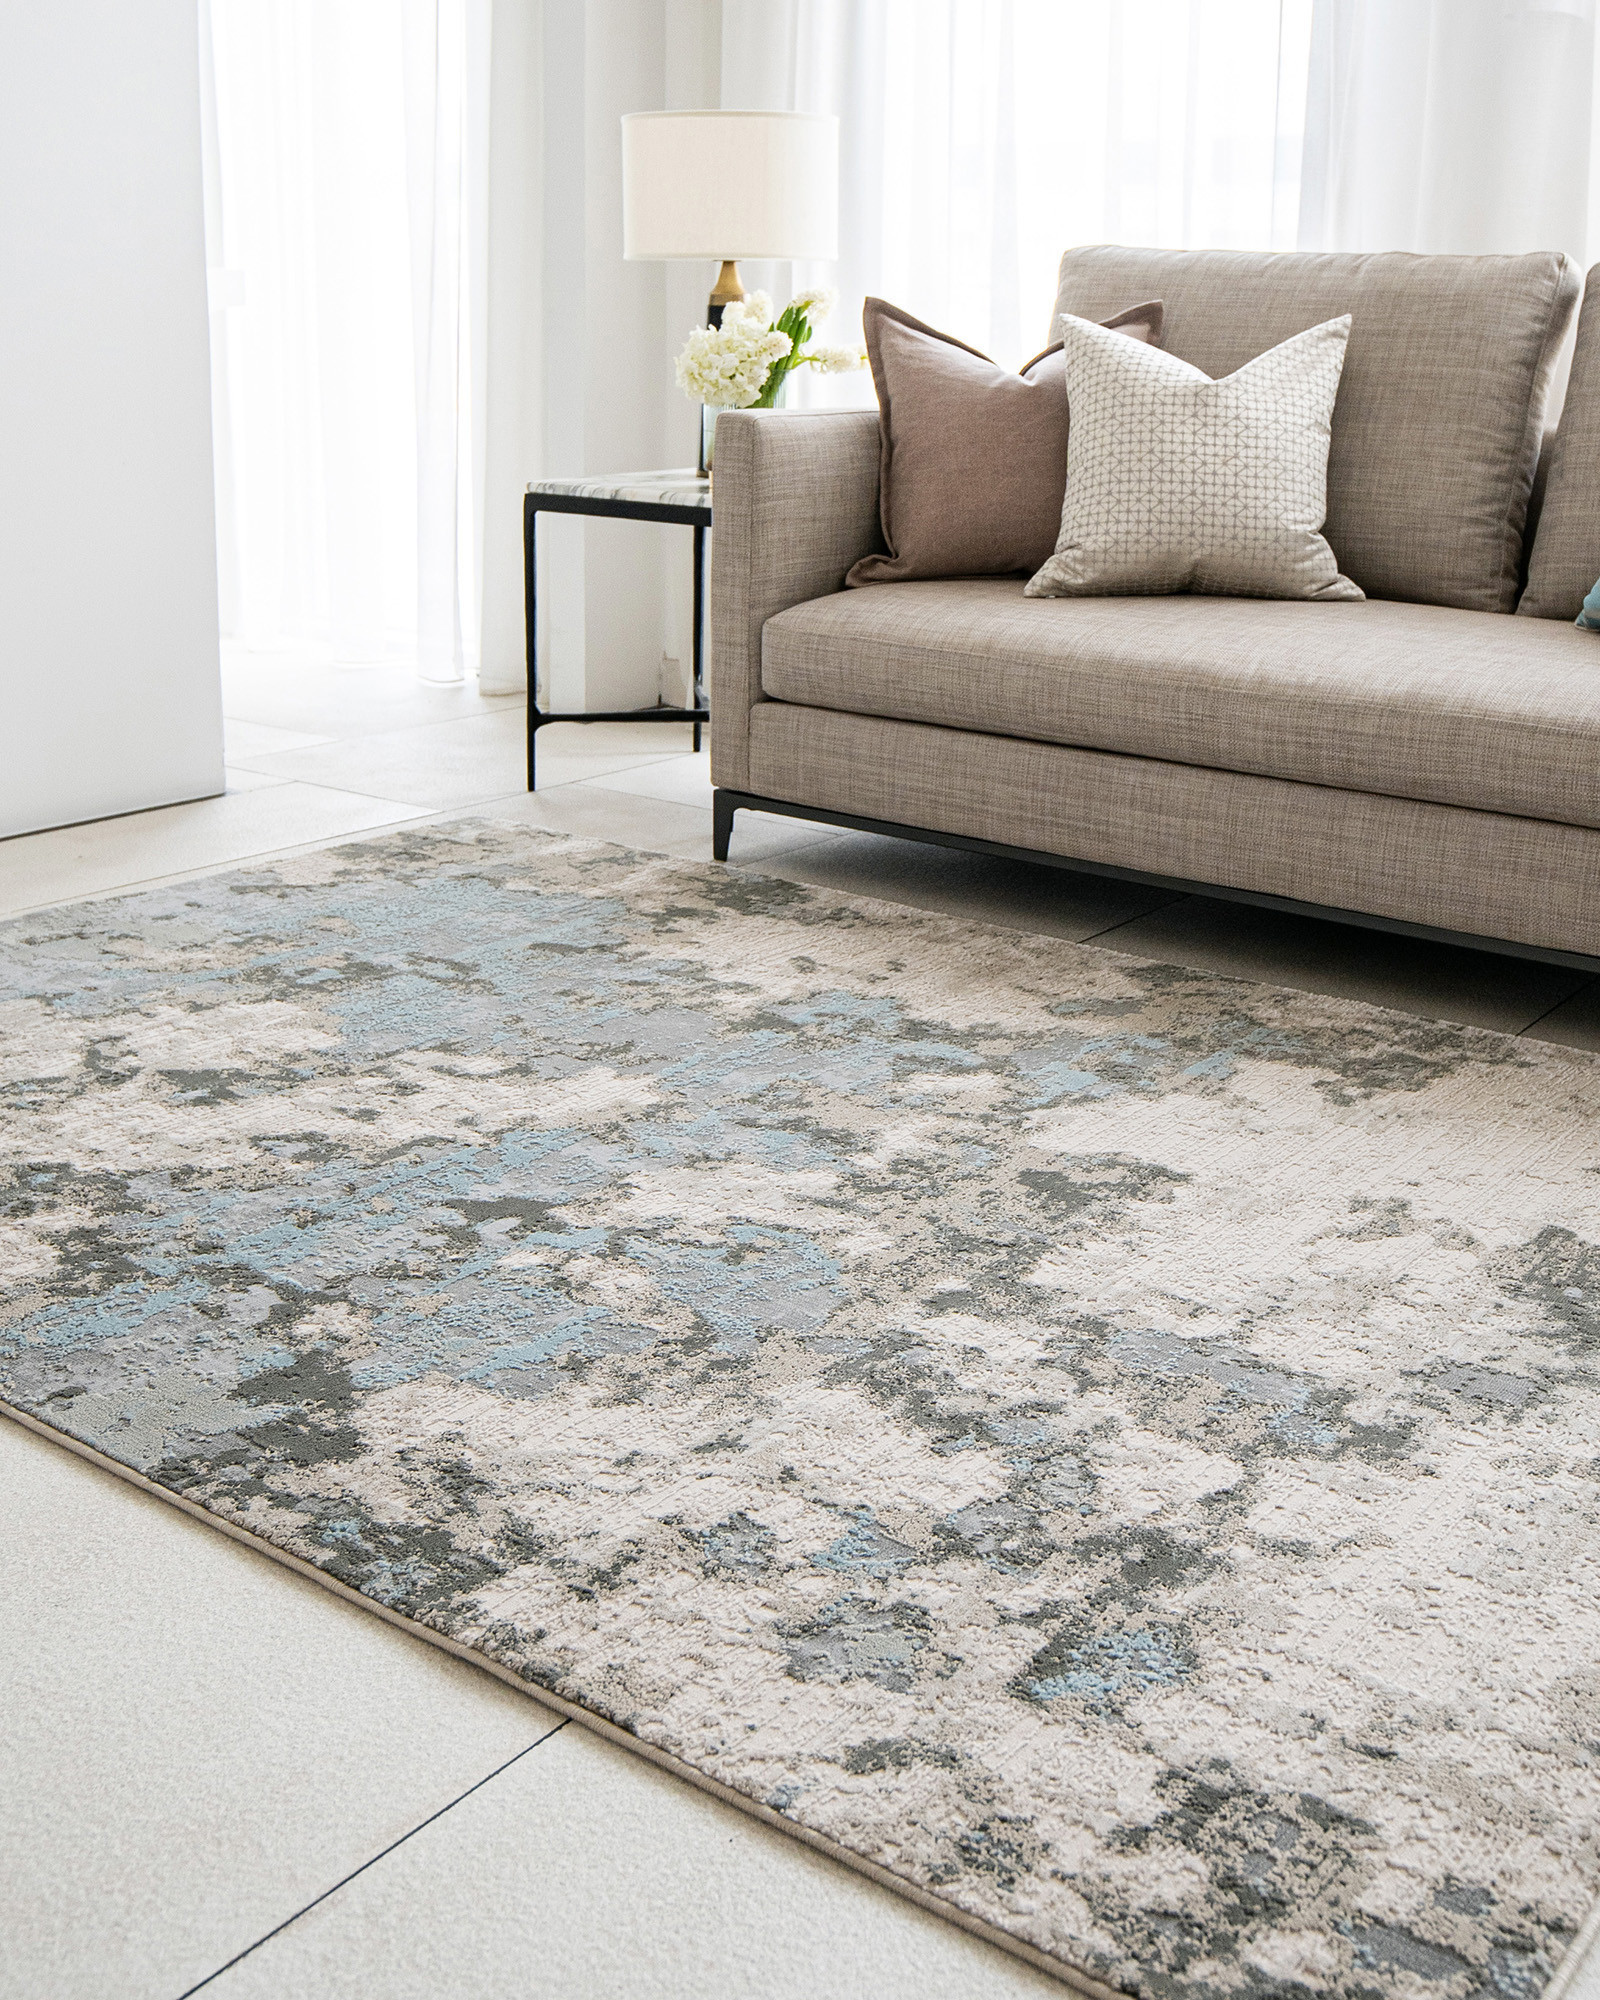 Cooper Sky 150 x 80 cm Carpet Knot Home Designer Rug for Bedroom Living Dining Room Office Soft Non-slip Area Textile Decor